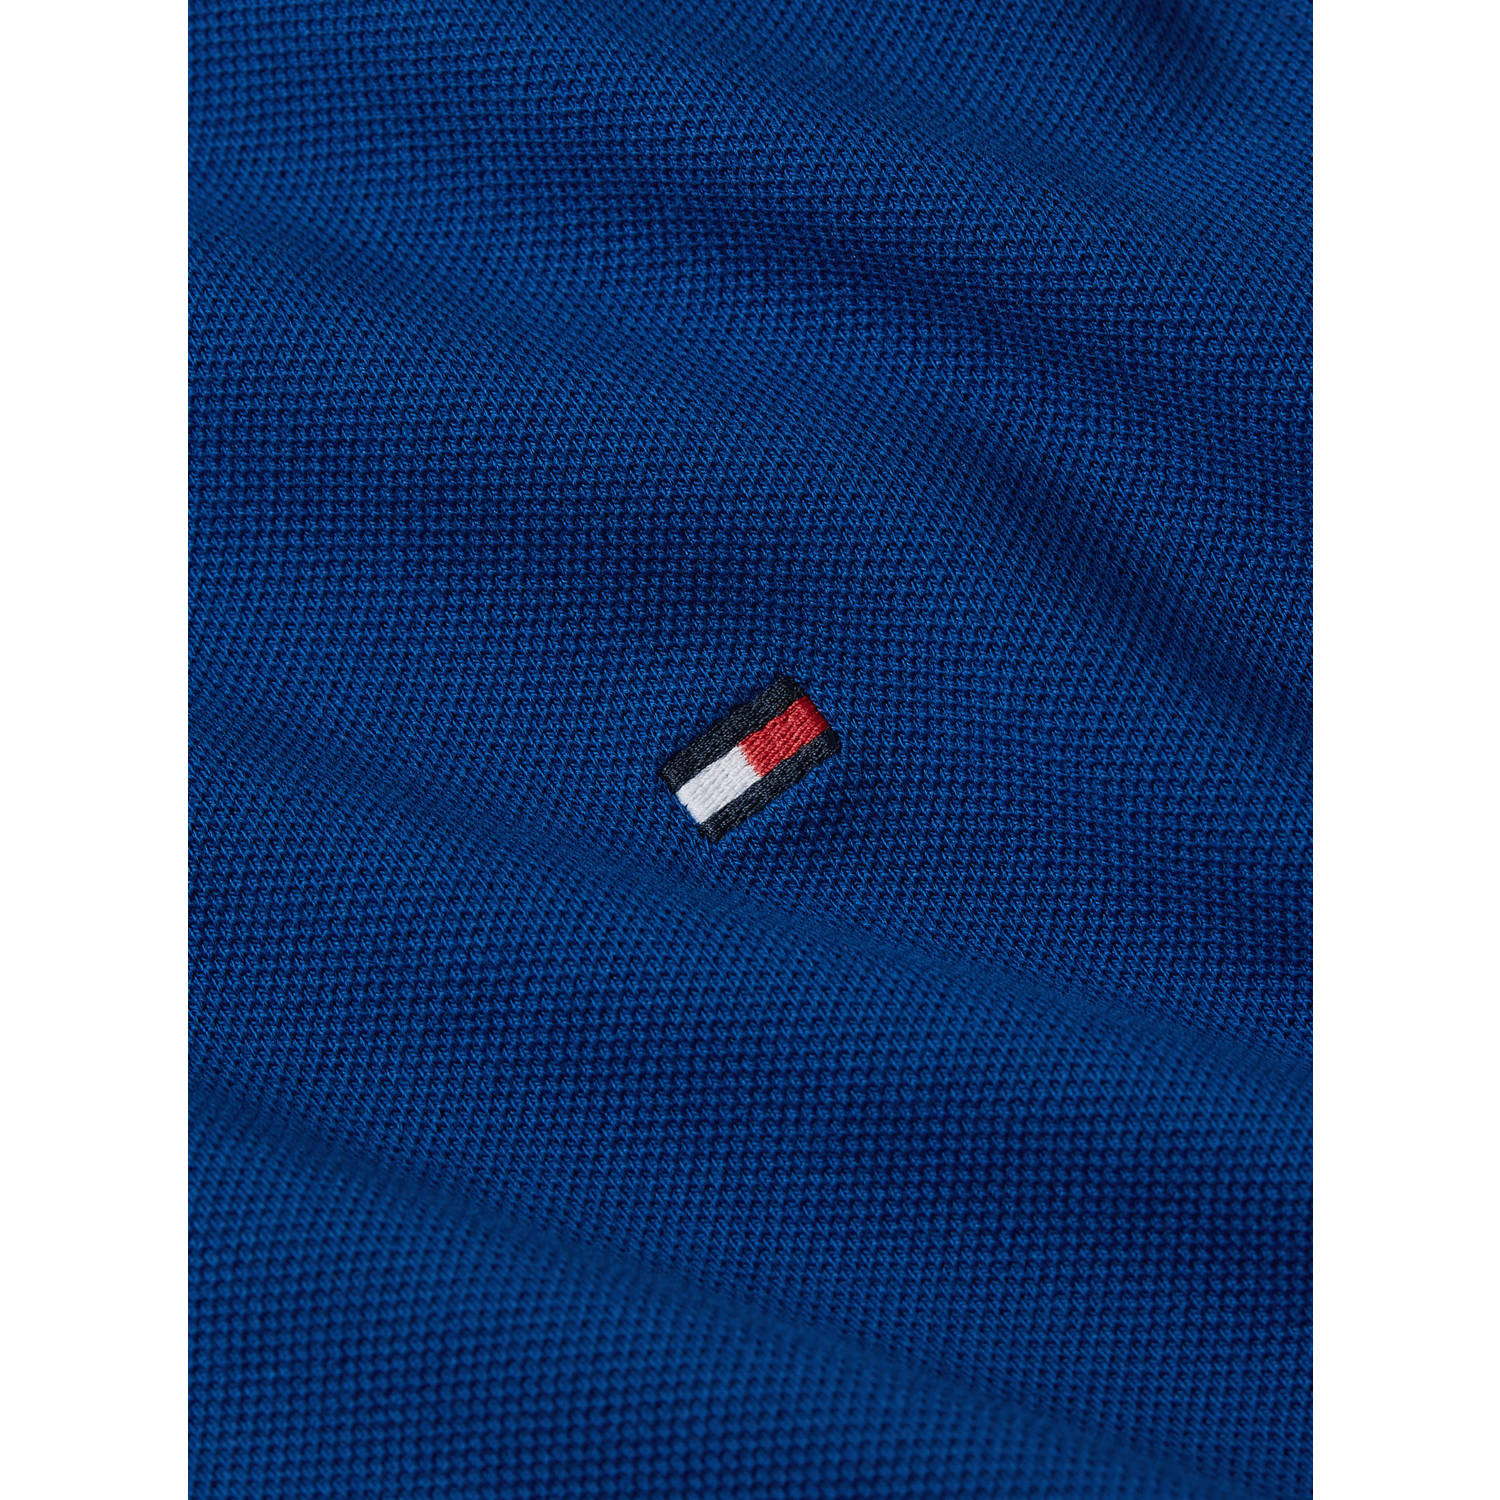 Tommy Hilfiger slim fit polo 1985 met logo anchor blue